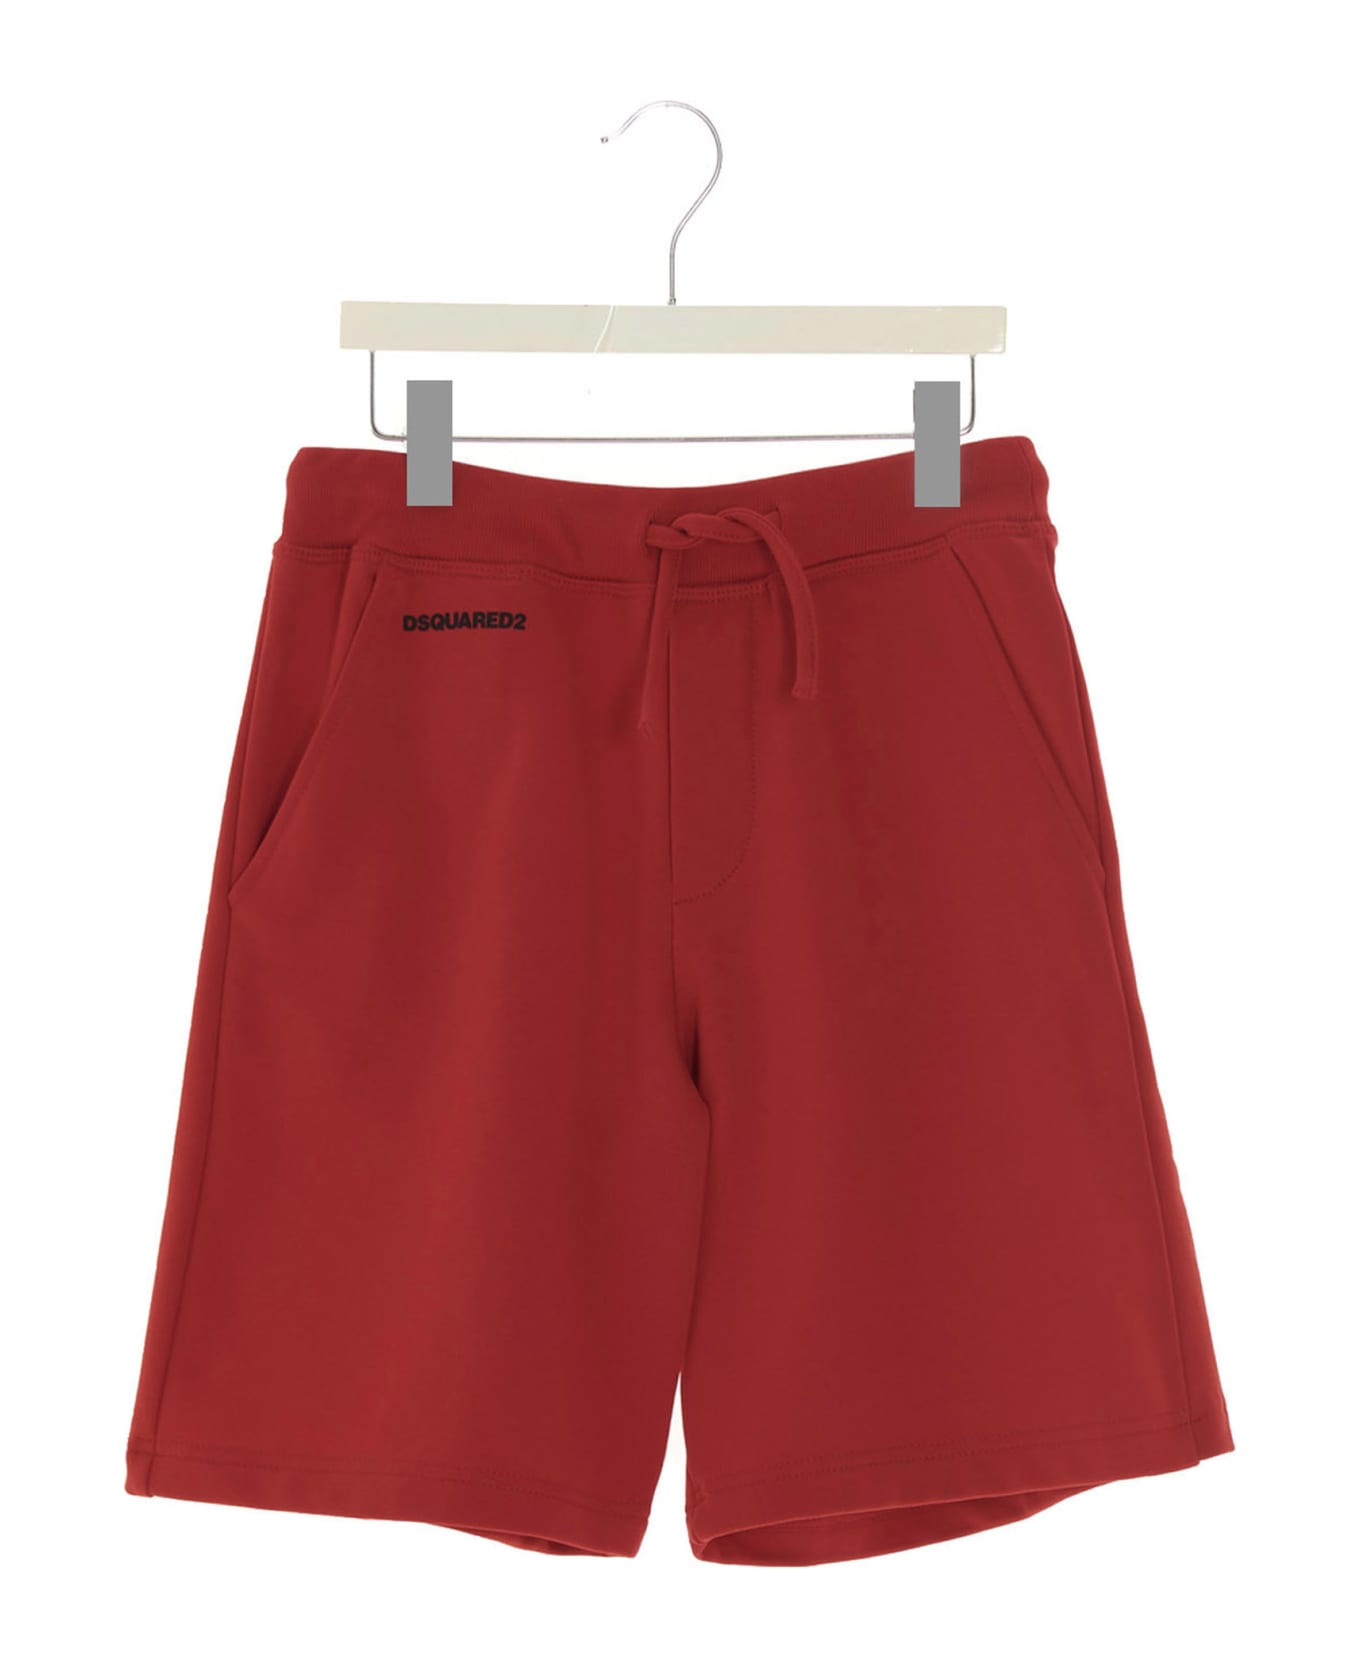 Dsquared2 Logo Bermuda Shorts - Red